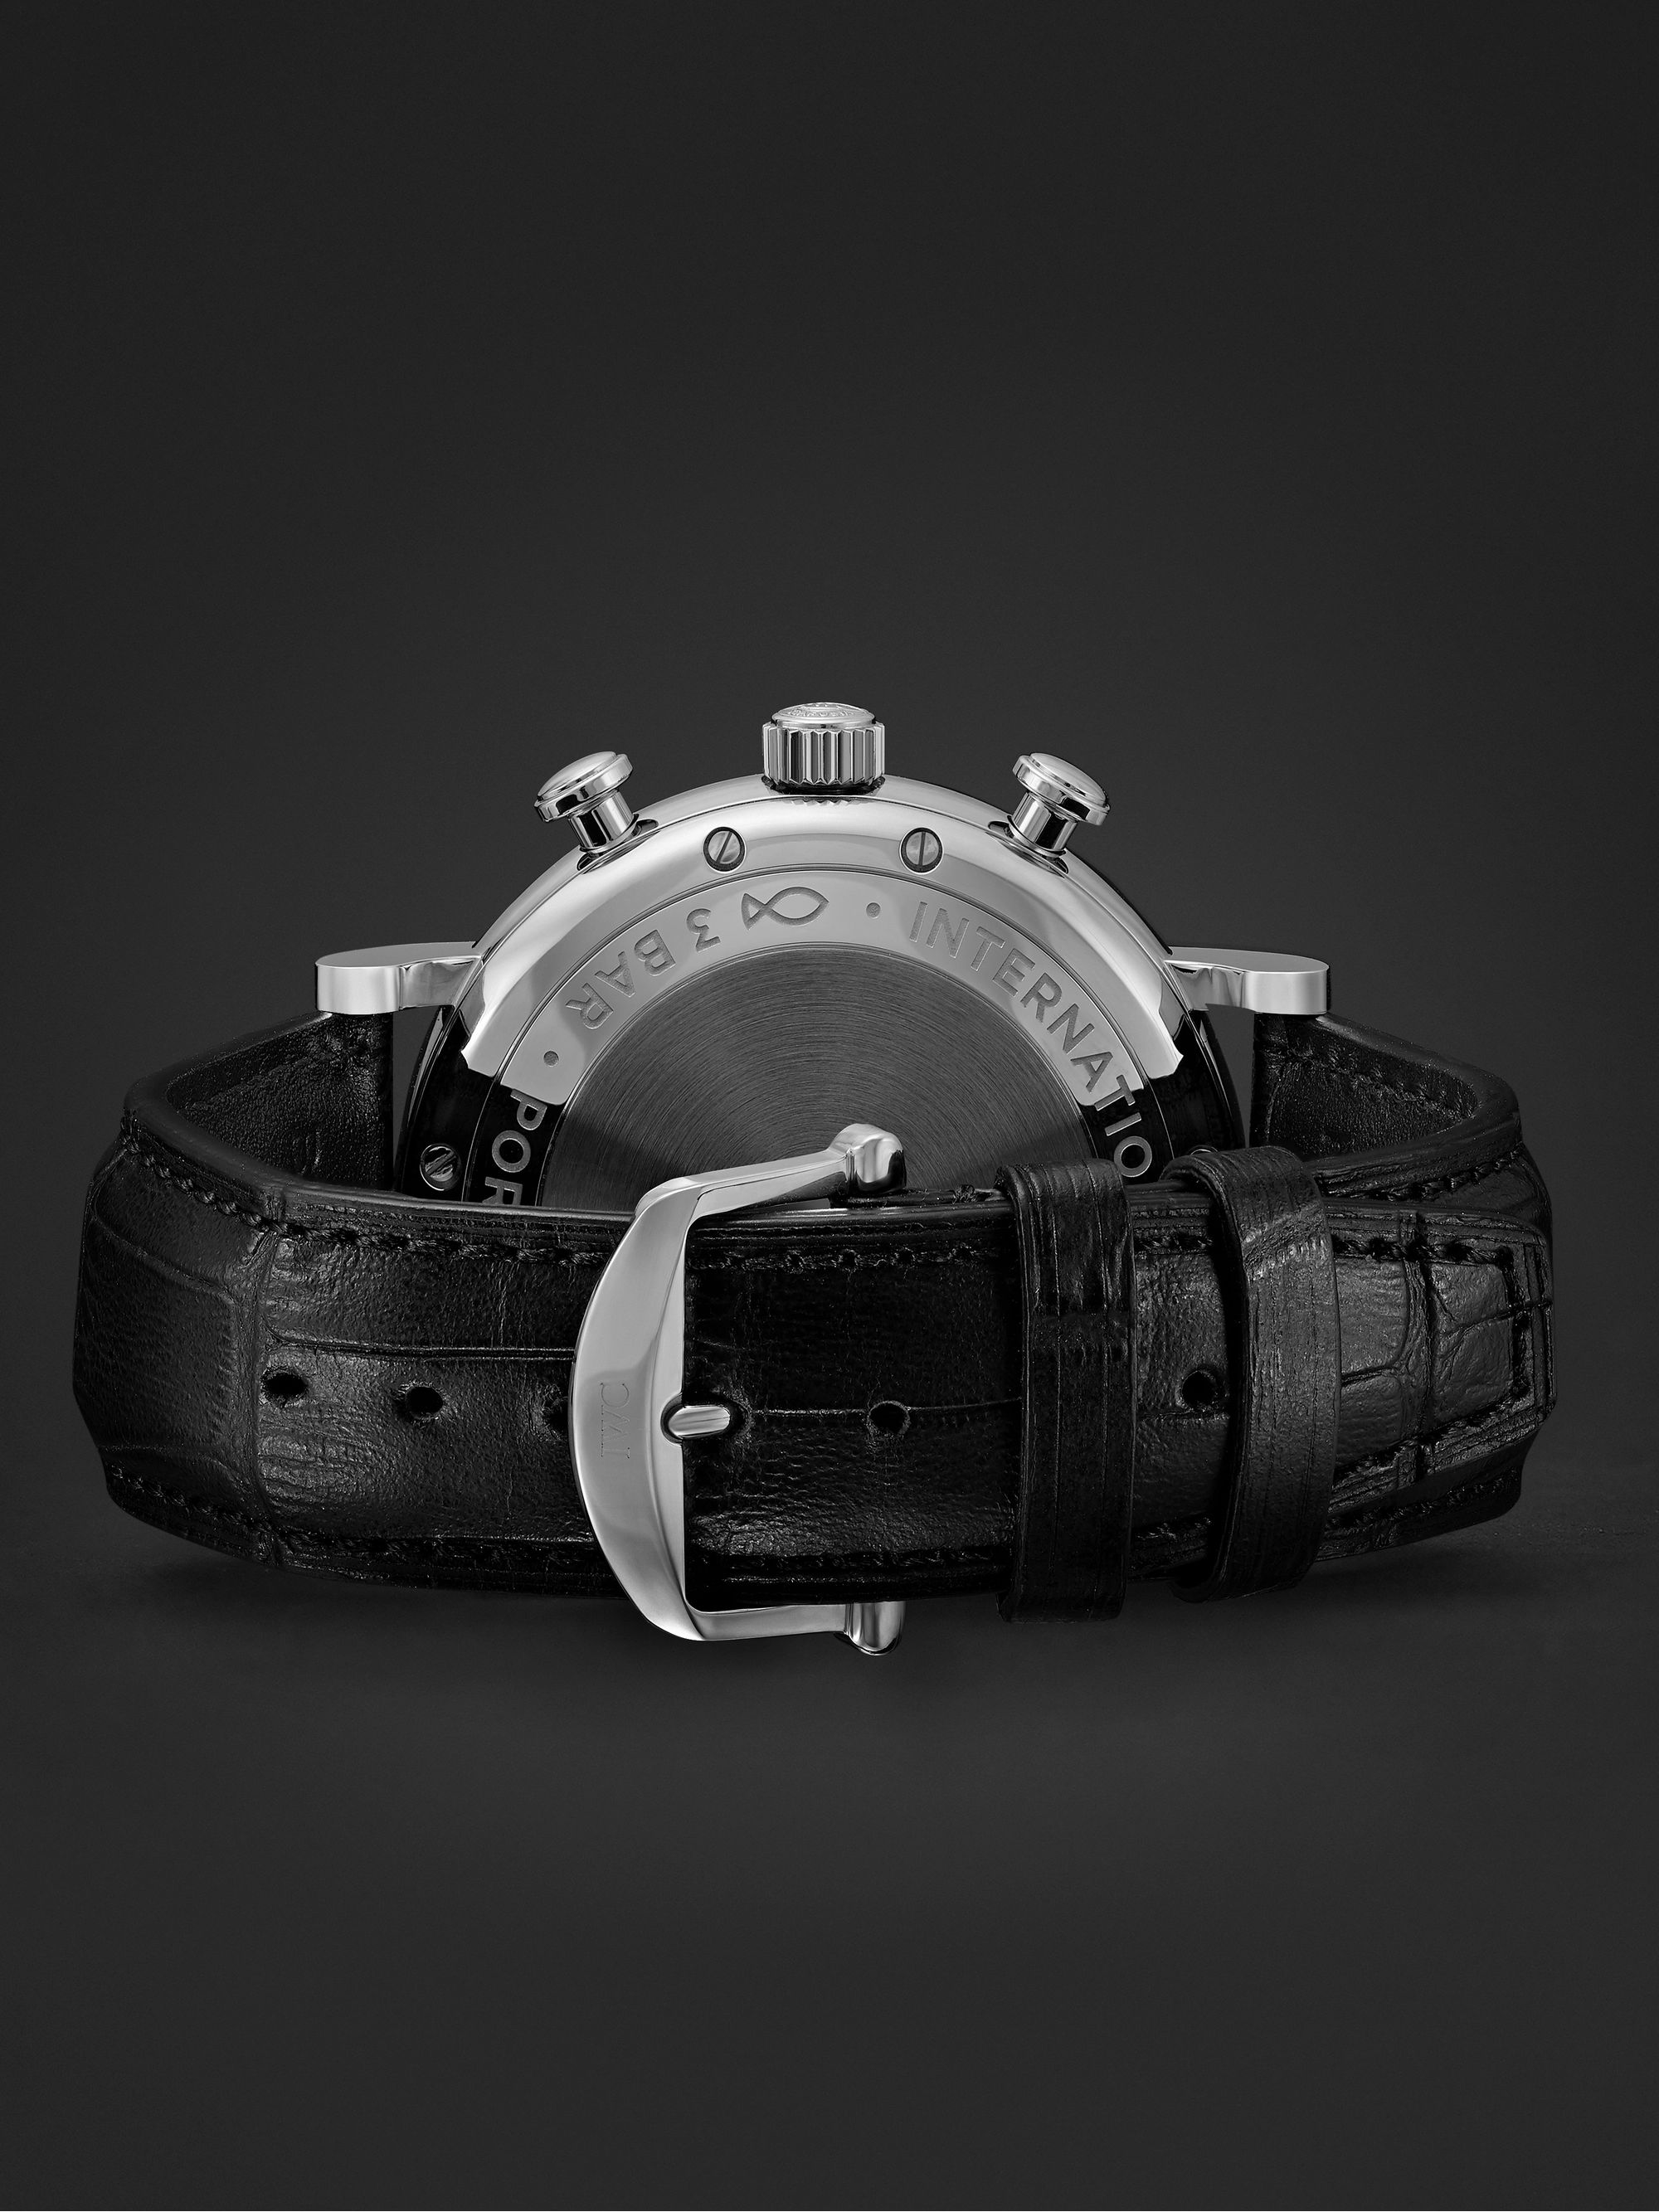 IWC SCHAFFHAUSEN Portofino Automatic Chronograph 42mm Stainless Steel and Alligator Watch, Ref. No. IW391036